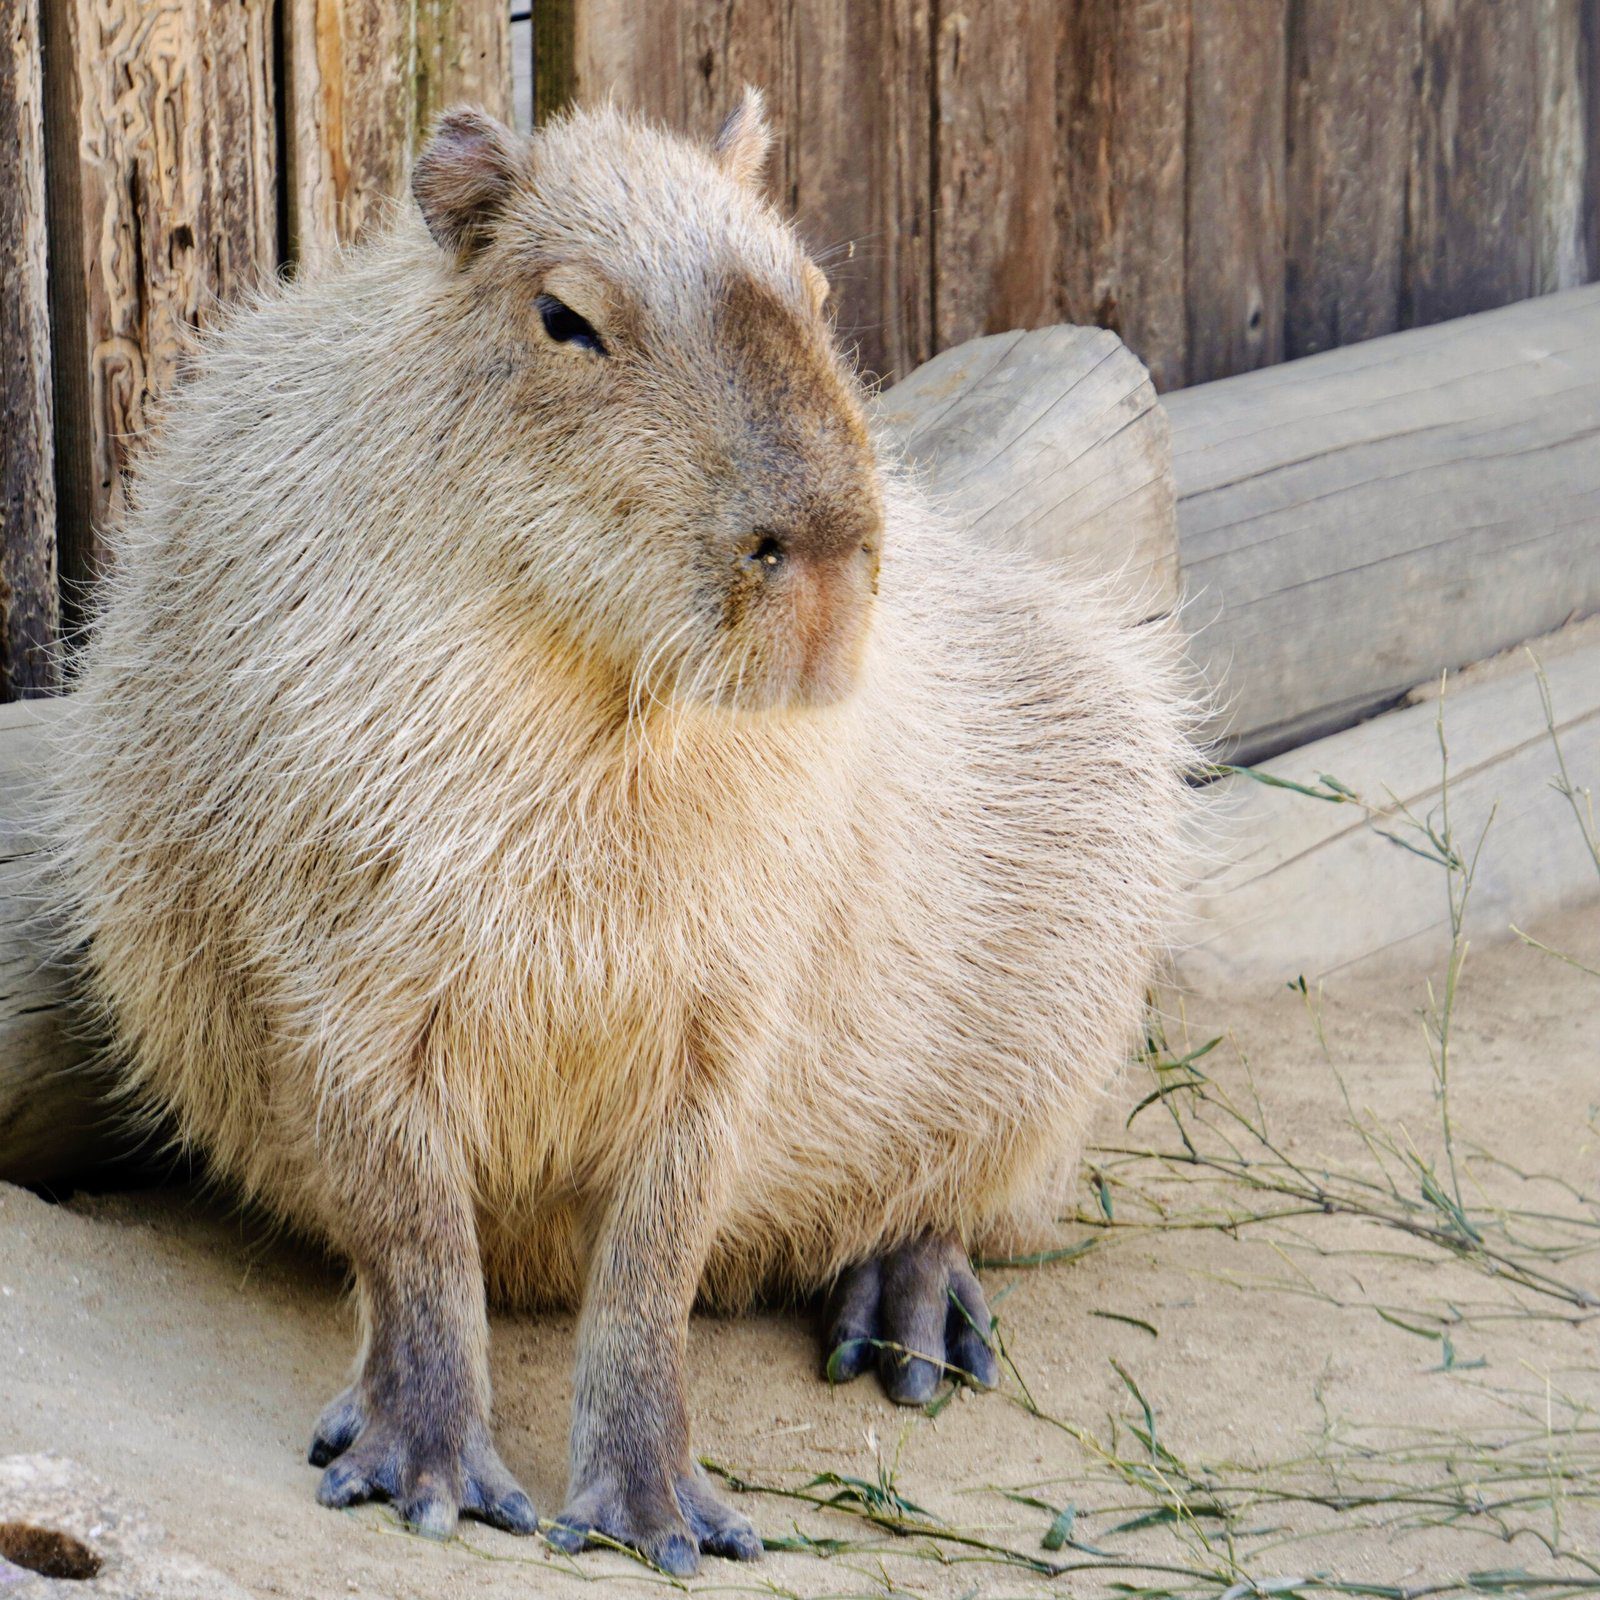 Why Adopt a Capybara?